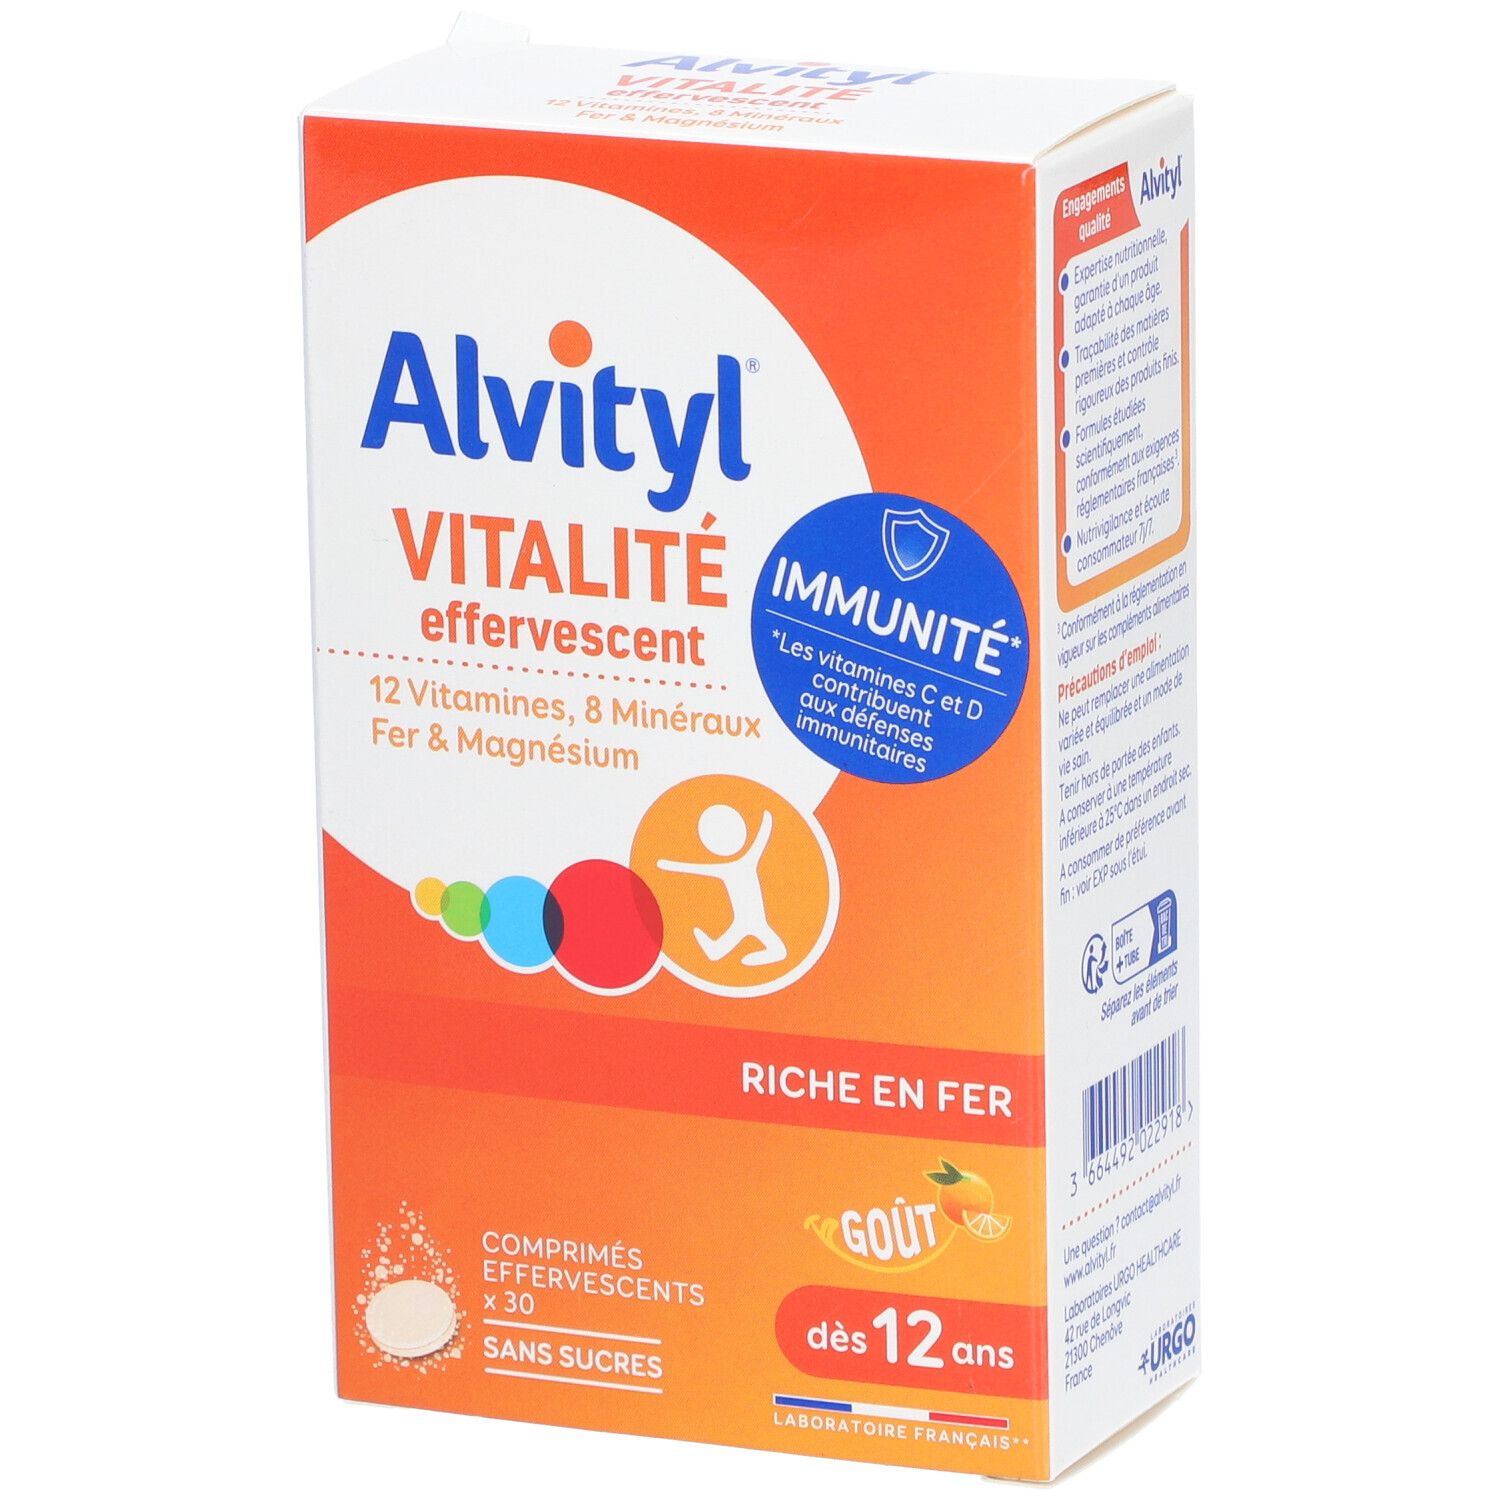 Alvityl® Vitalité effervescent